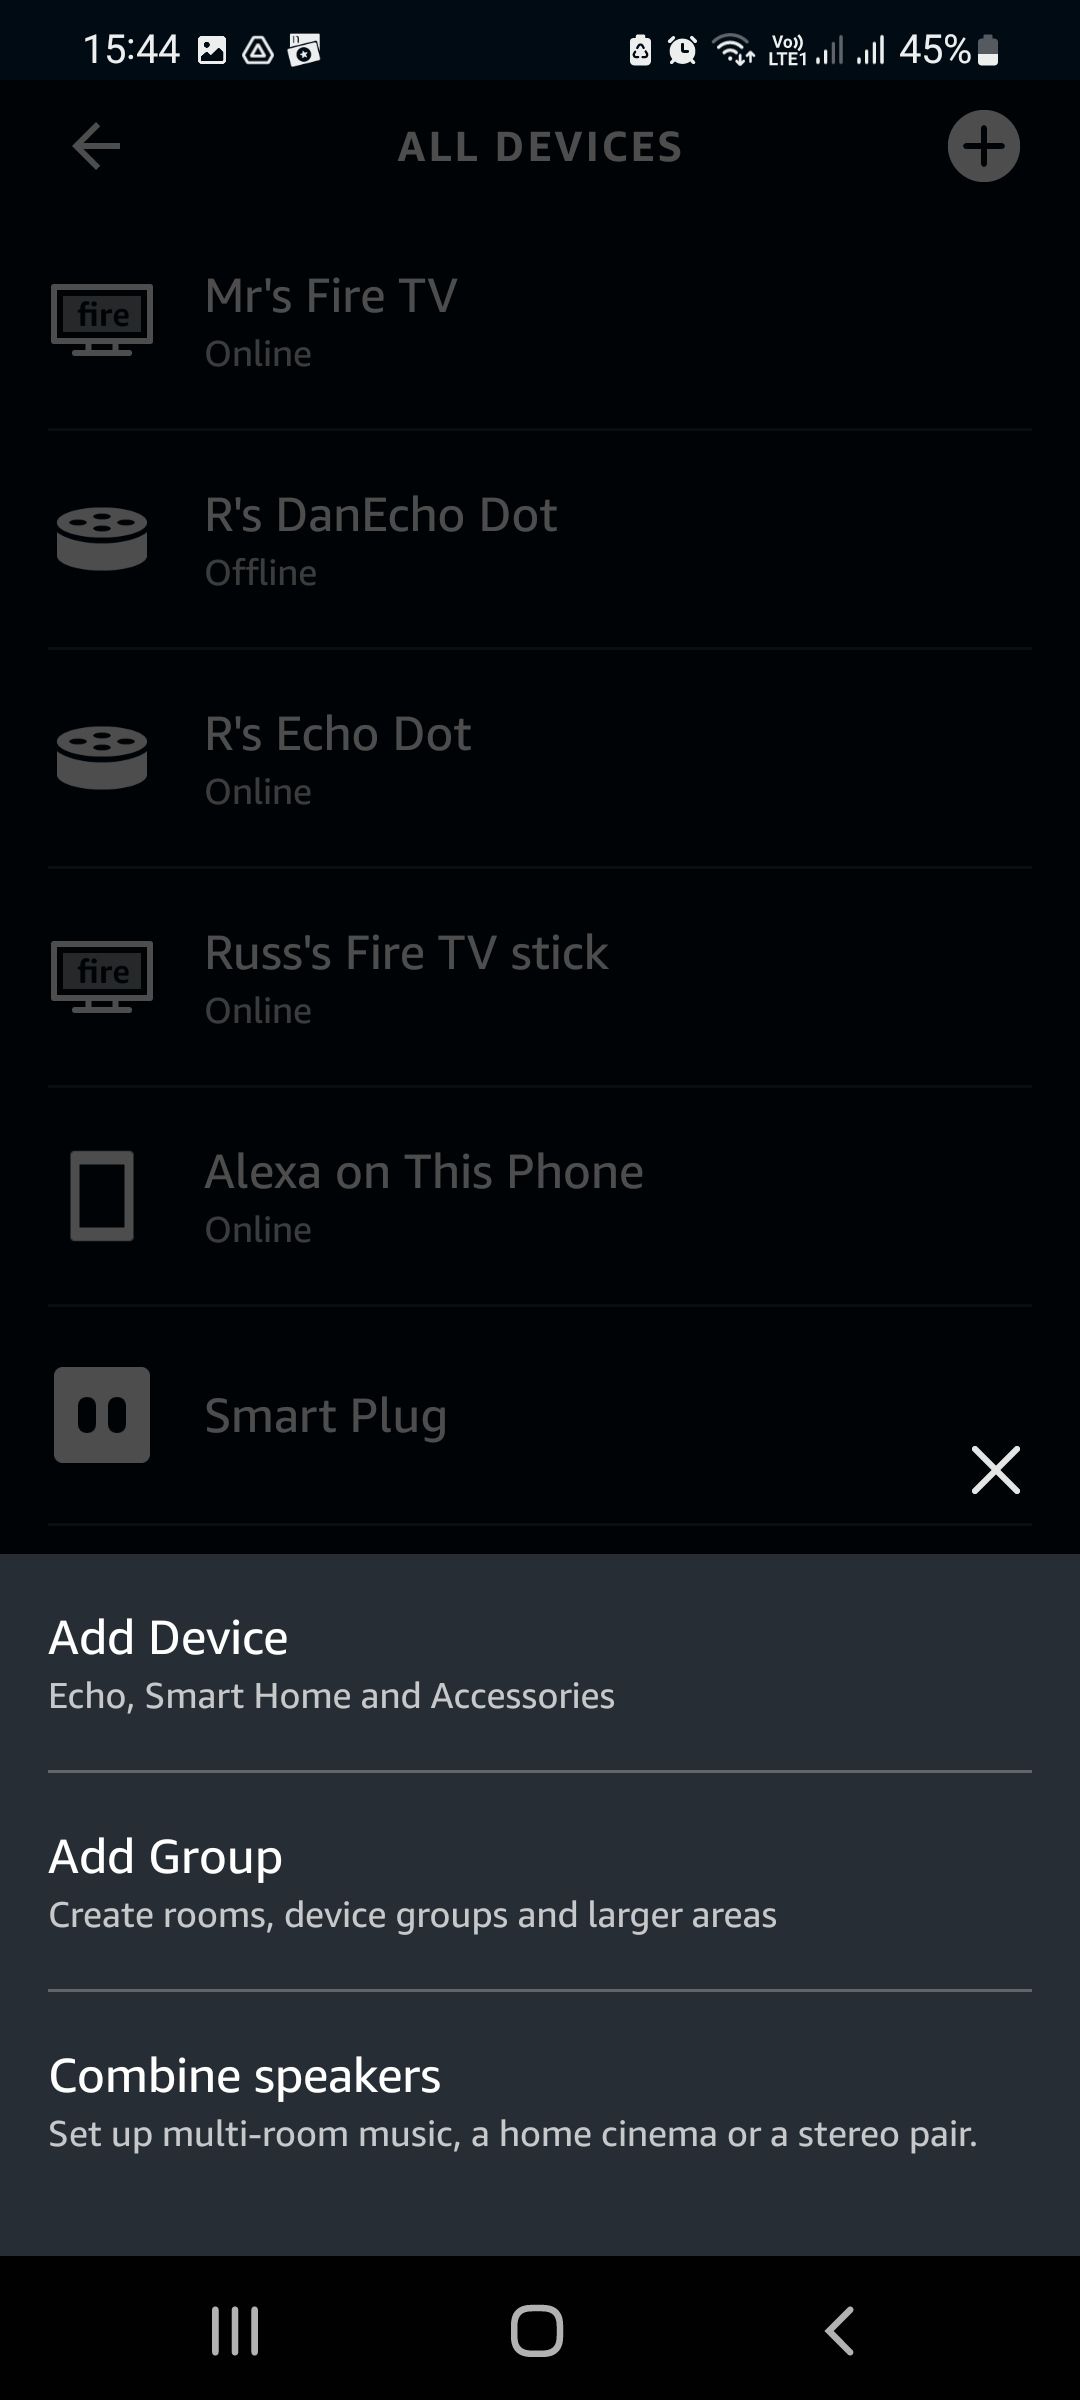 The Alexa add devices menu